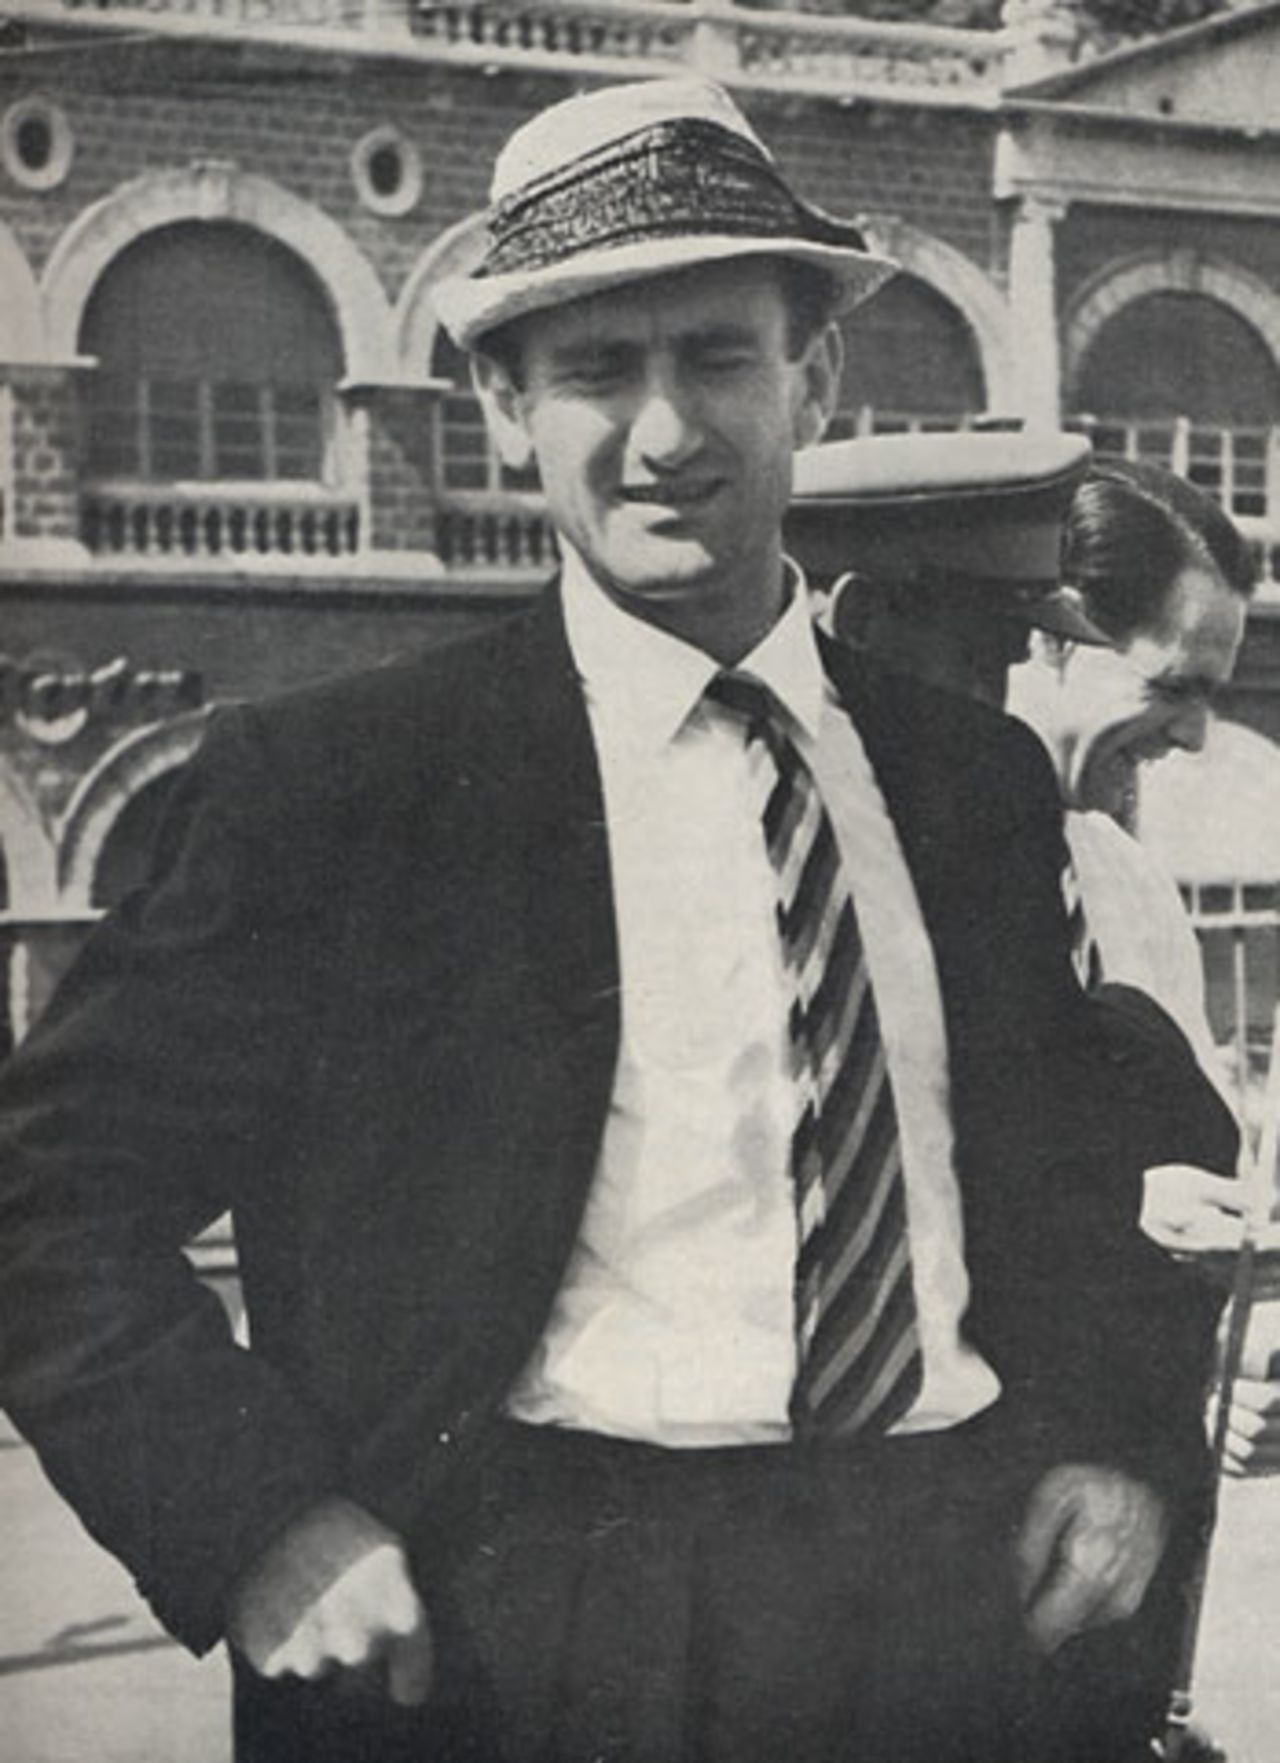 Ted Dexter in Australia, 1964